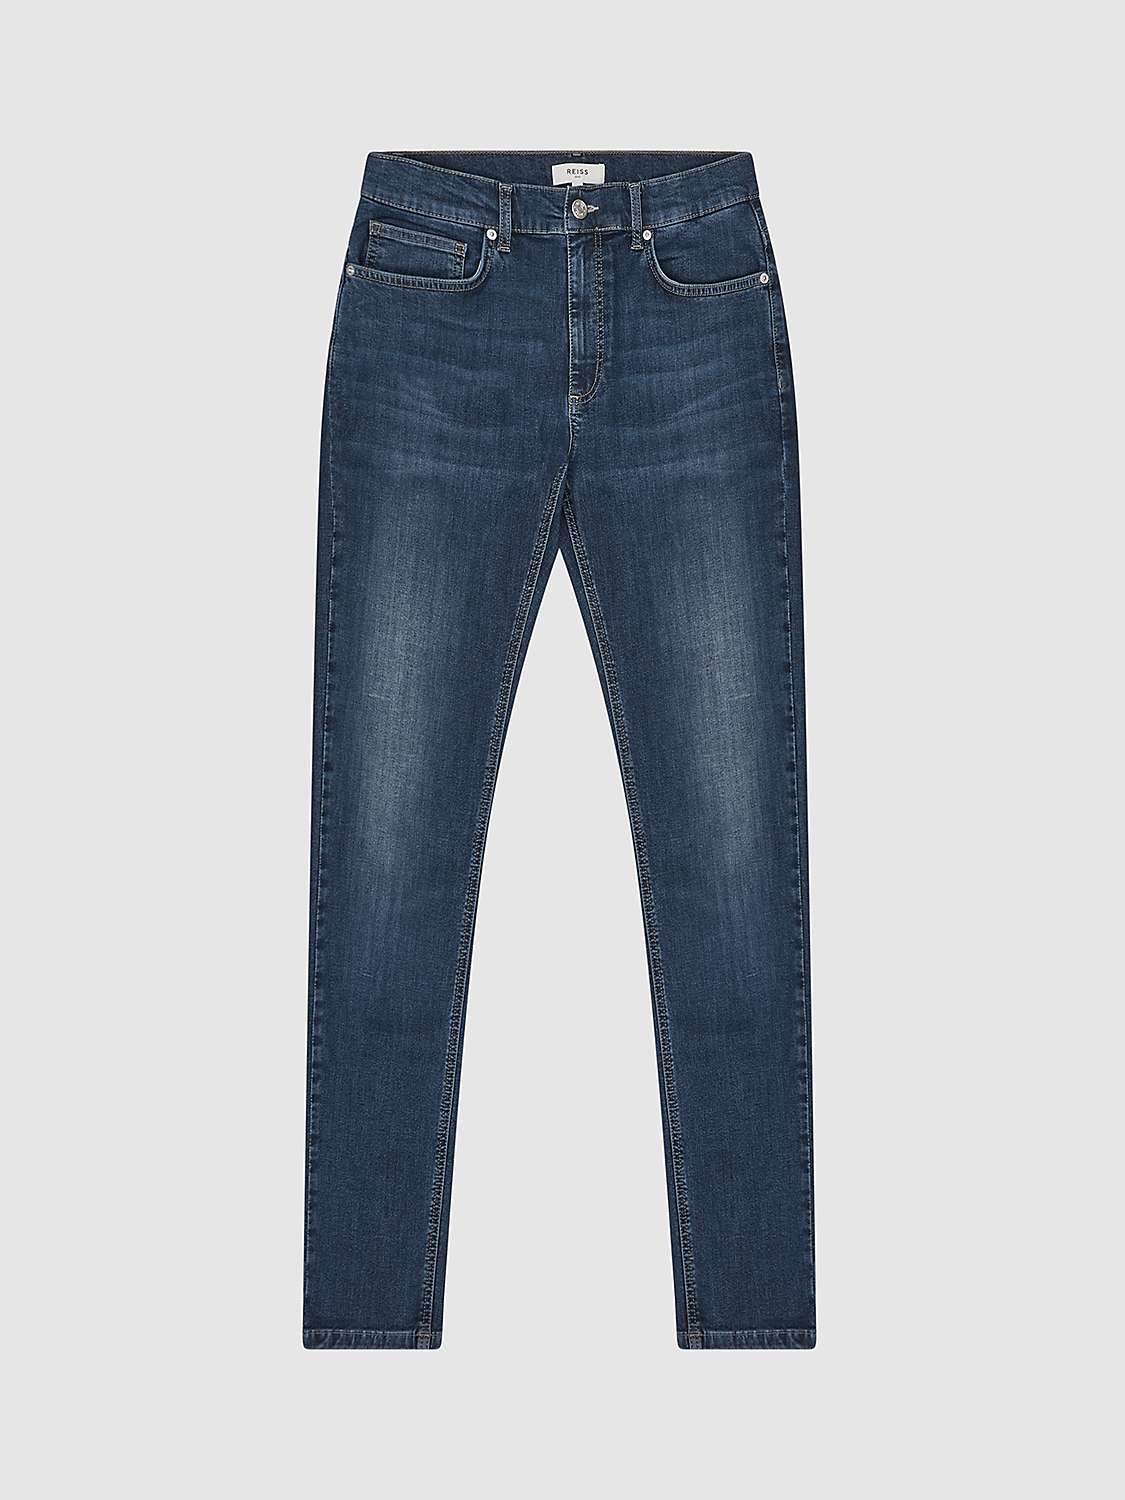 Buy Reiss James Jersey Slim Fit Jeans Online at johnlewis.com